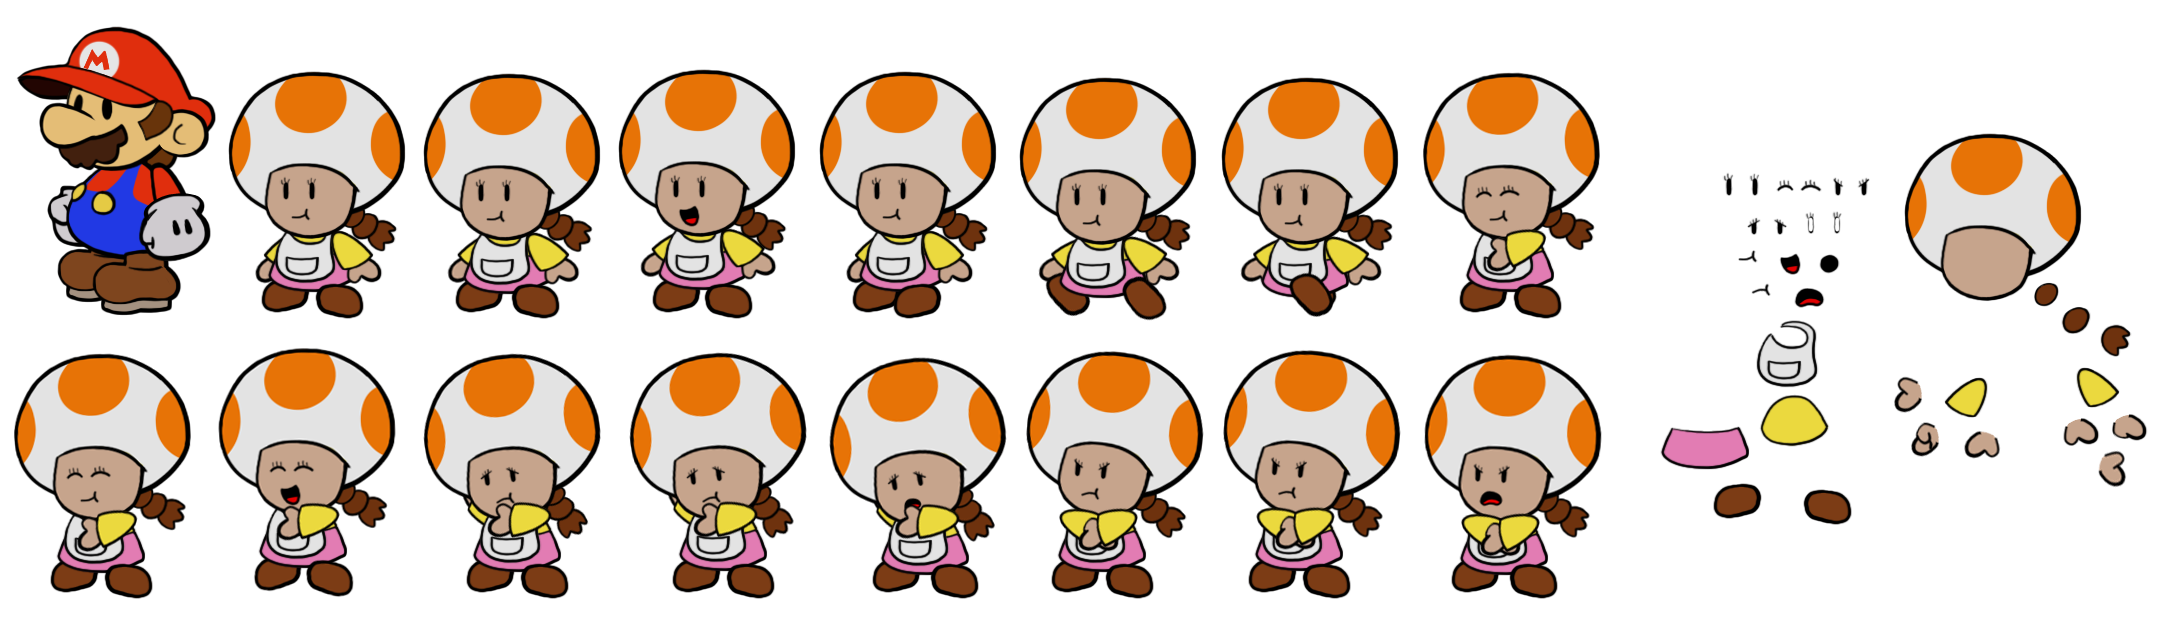 Paper Mario Customs - Innkeeper Toadette (Paper Mario-Style)